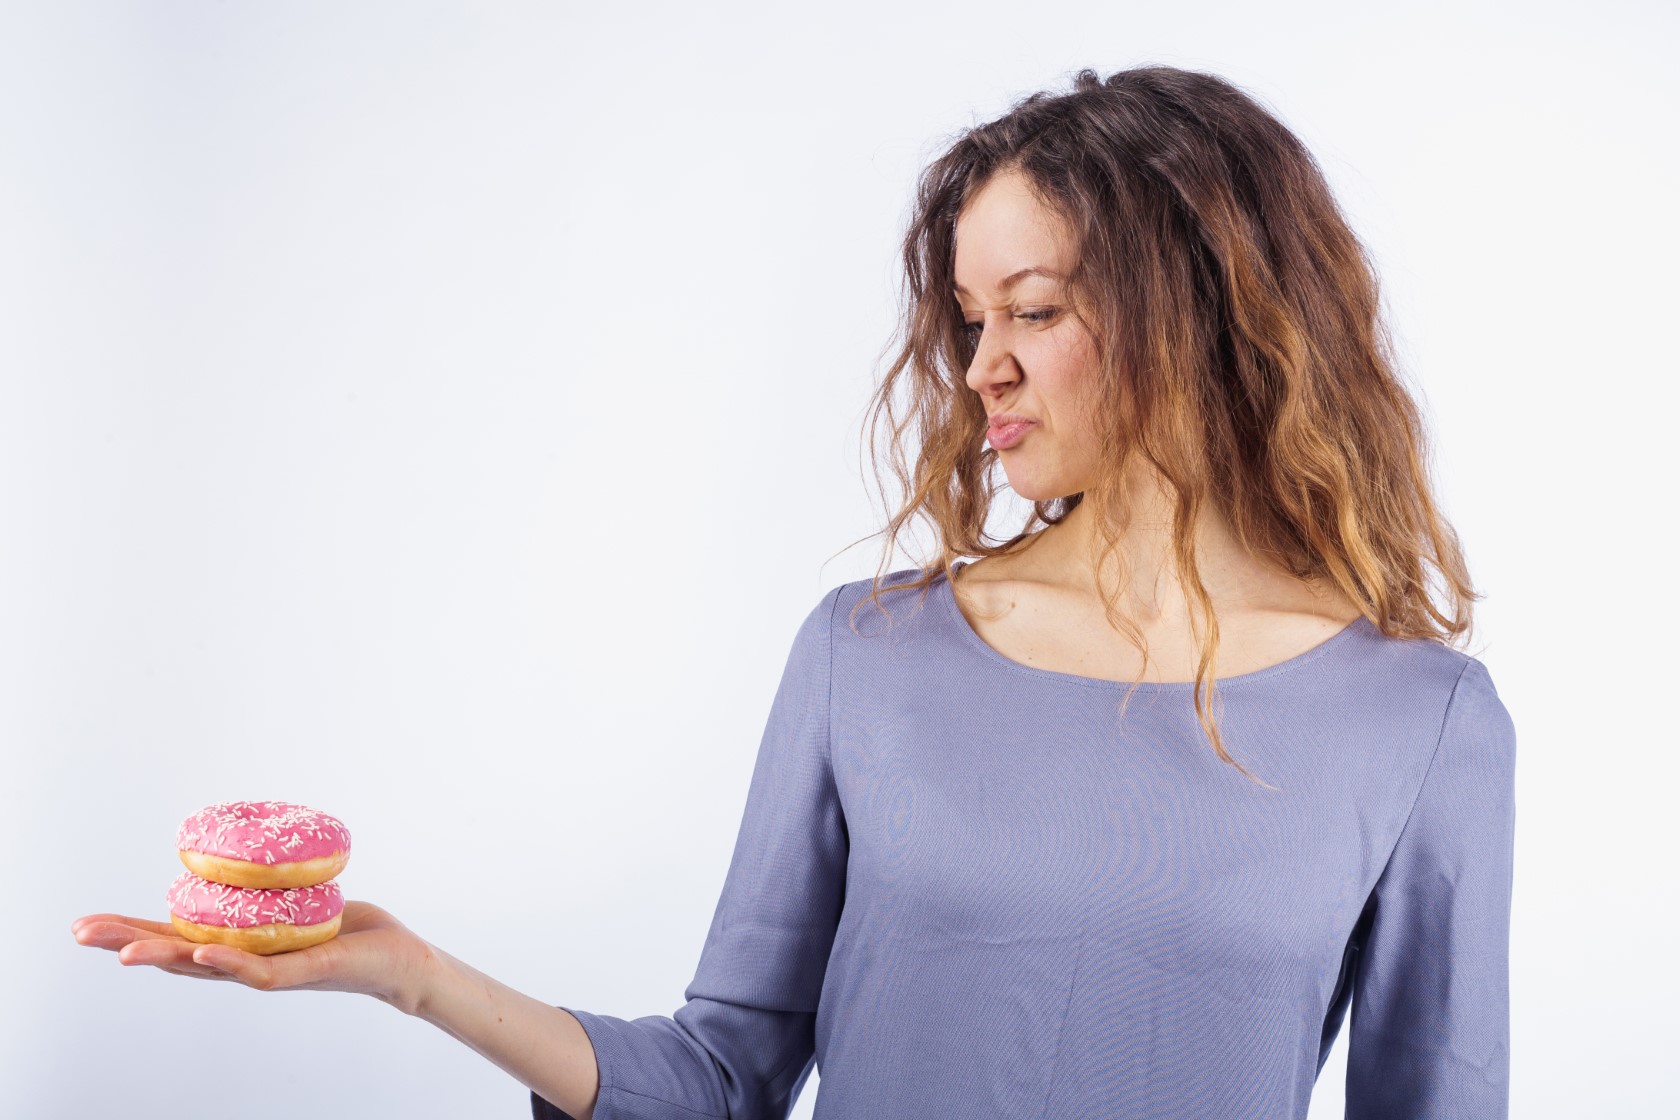 How one woman beat sugar cravings.